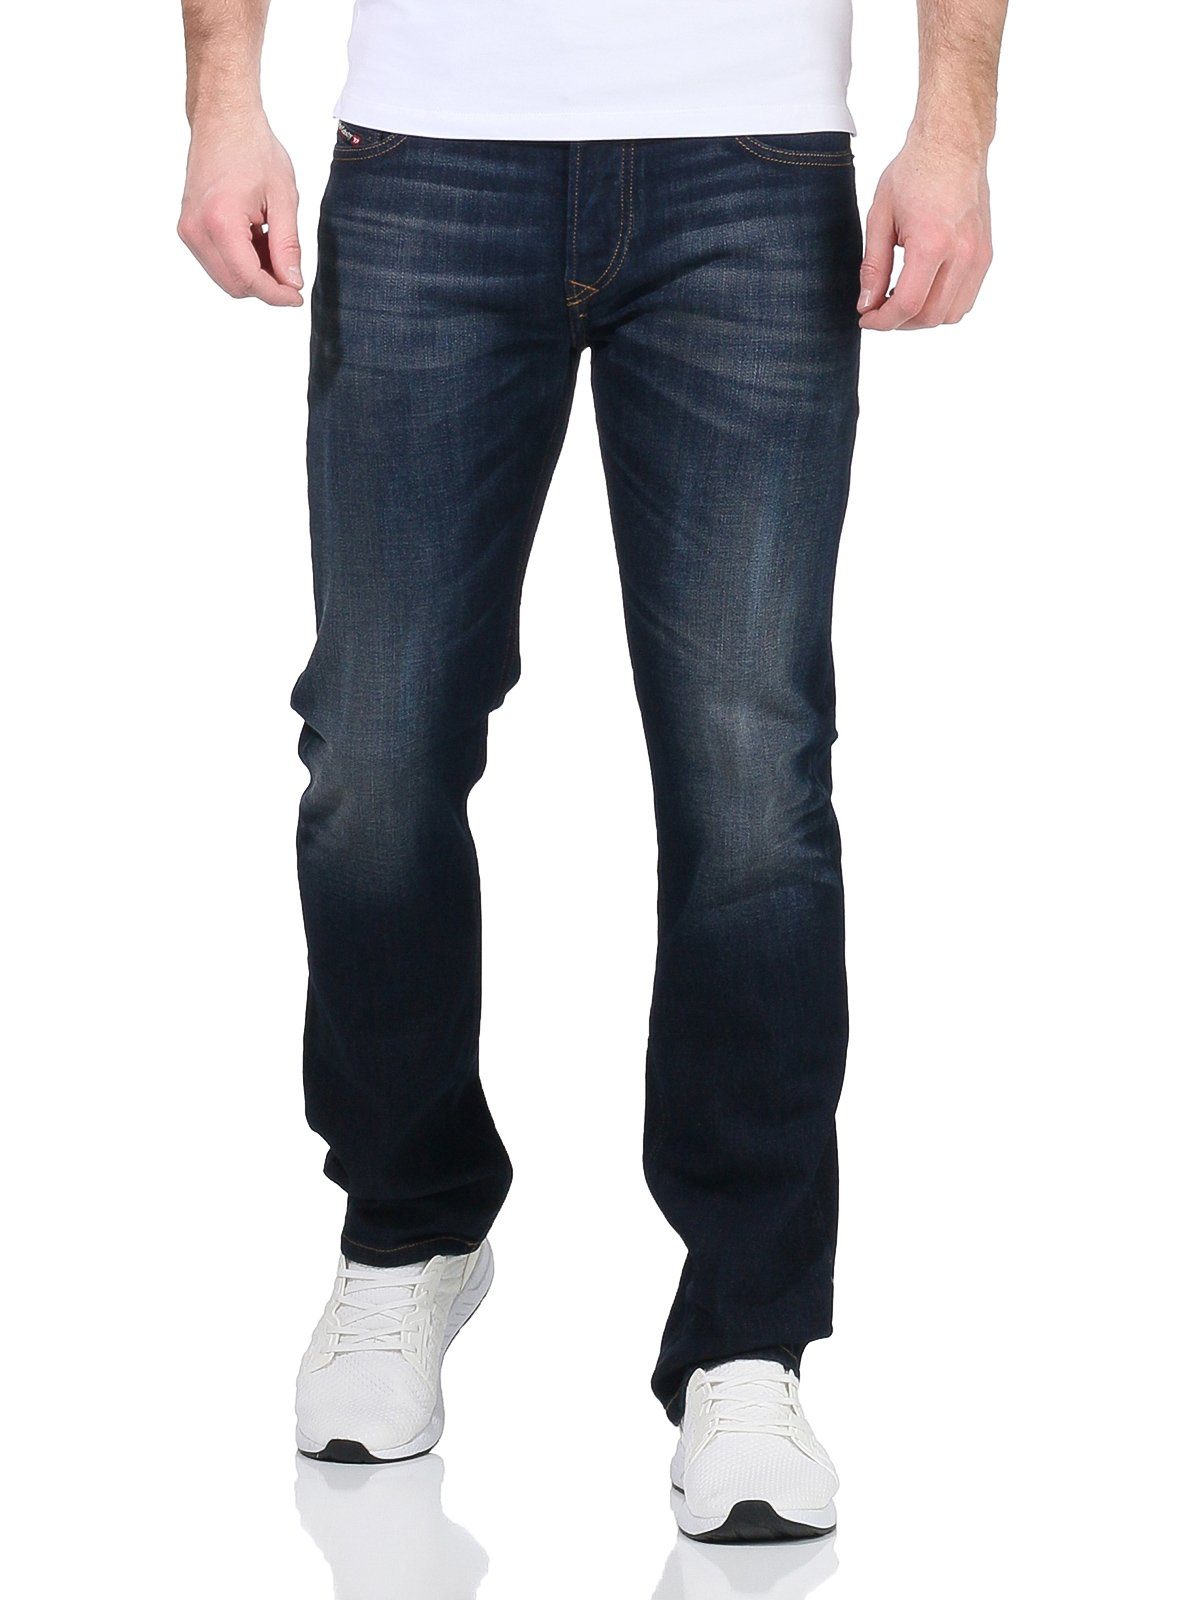 5 0890Z - Diesel Pocket Style, SAFADO-X Diesel Used-Look Herren Dezenter Stretch-Jeans Stretch-Jeans